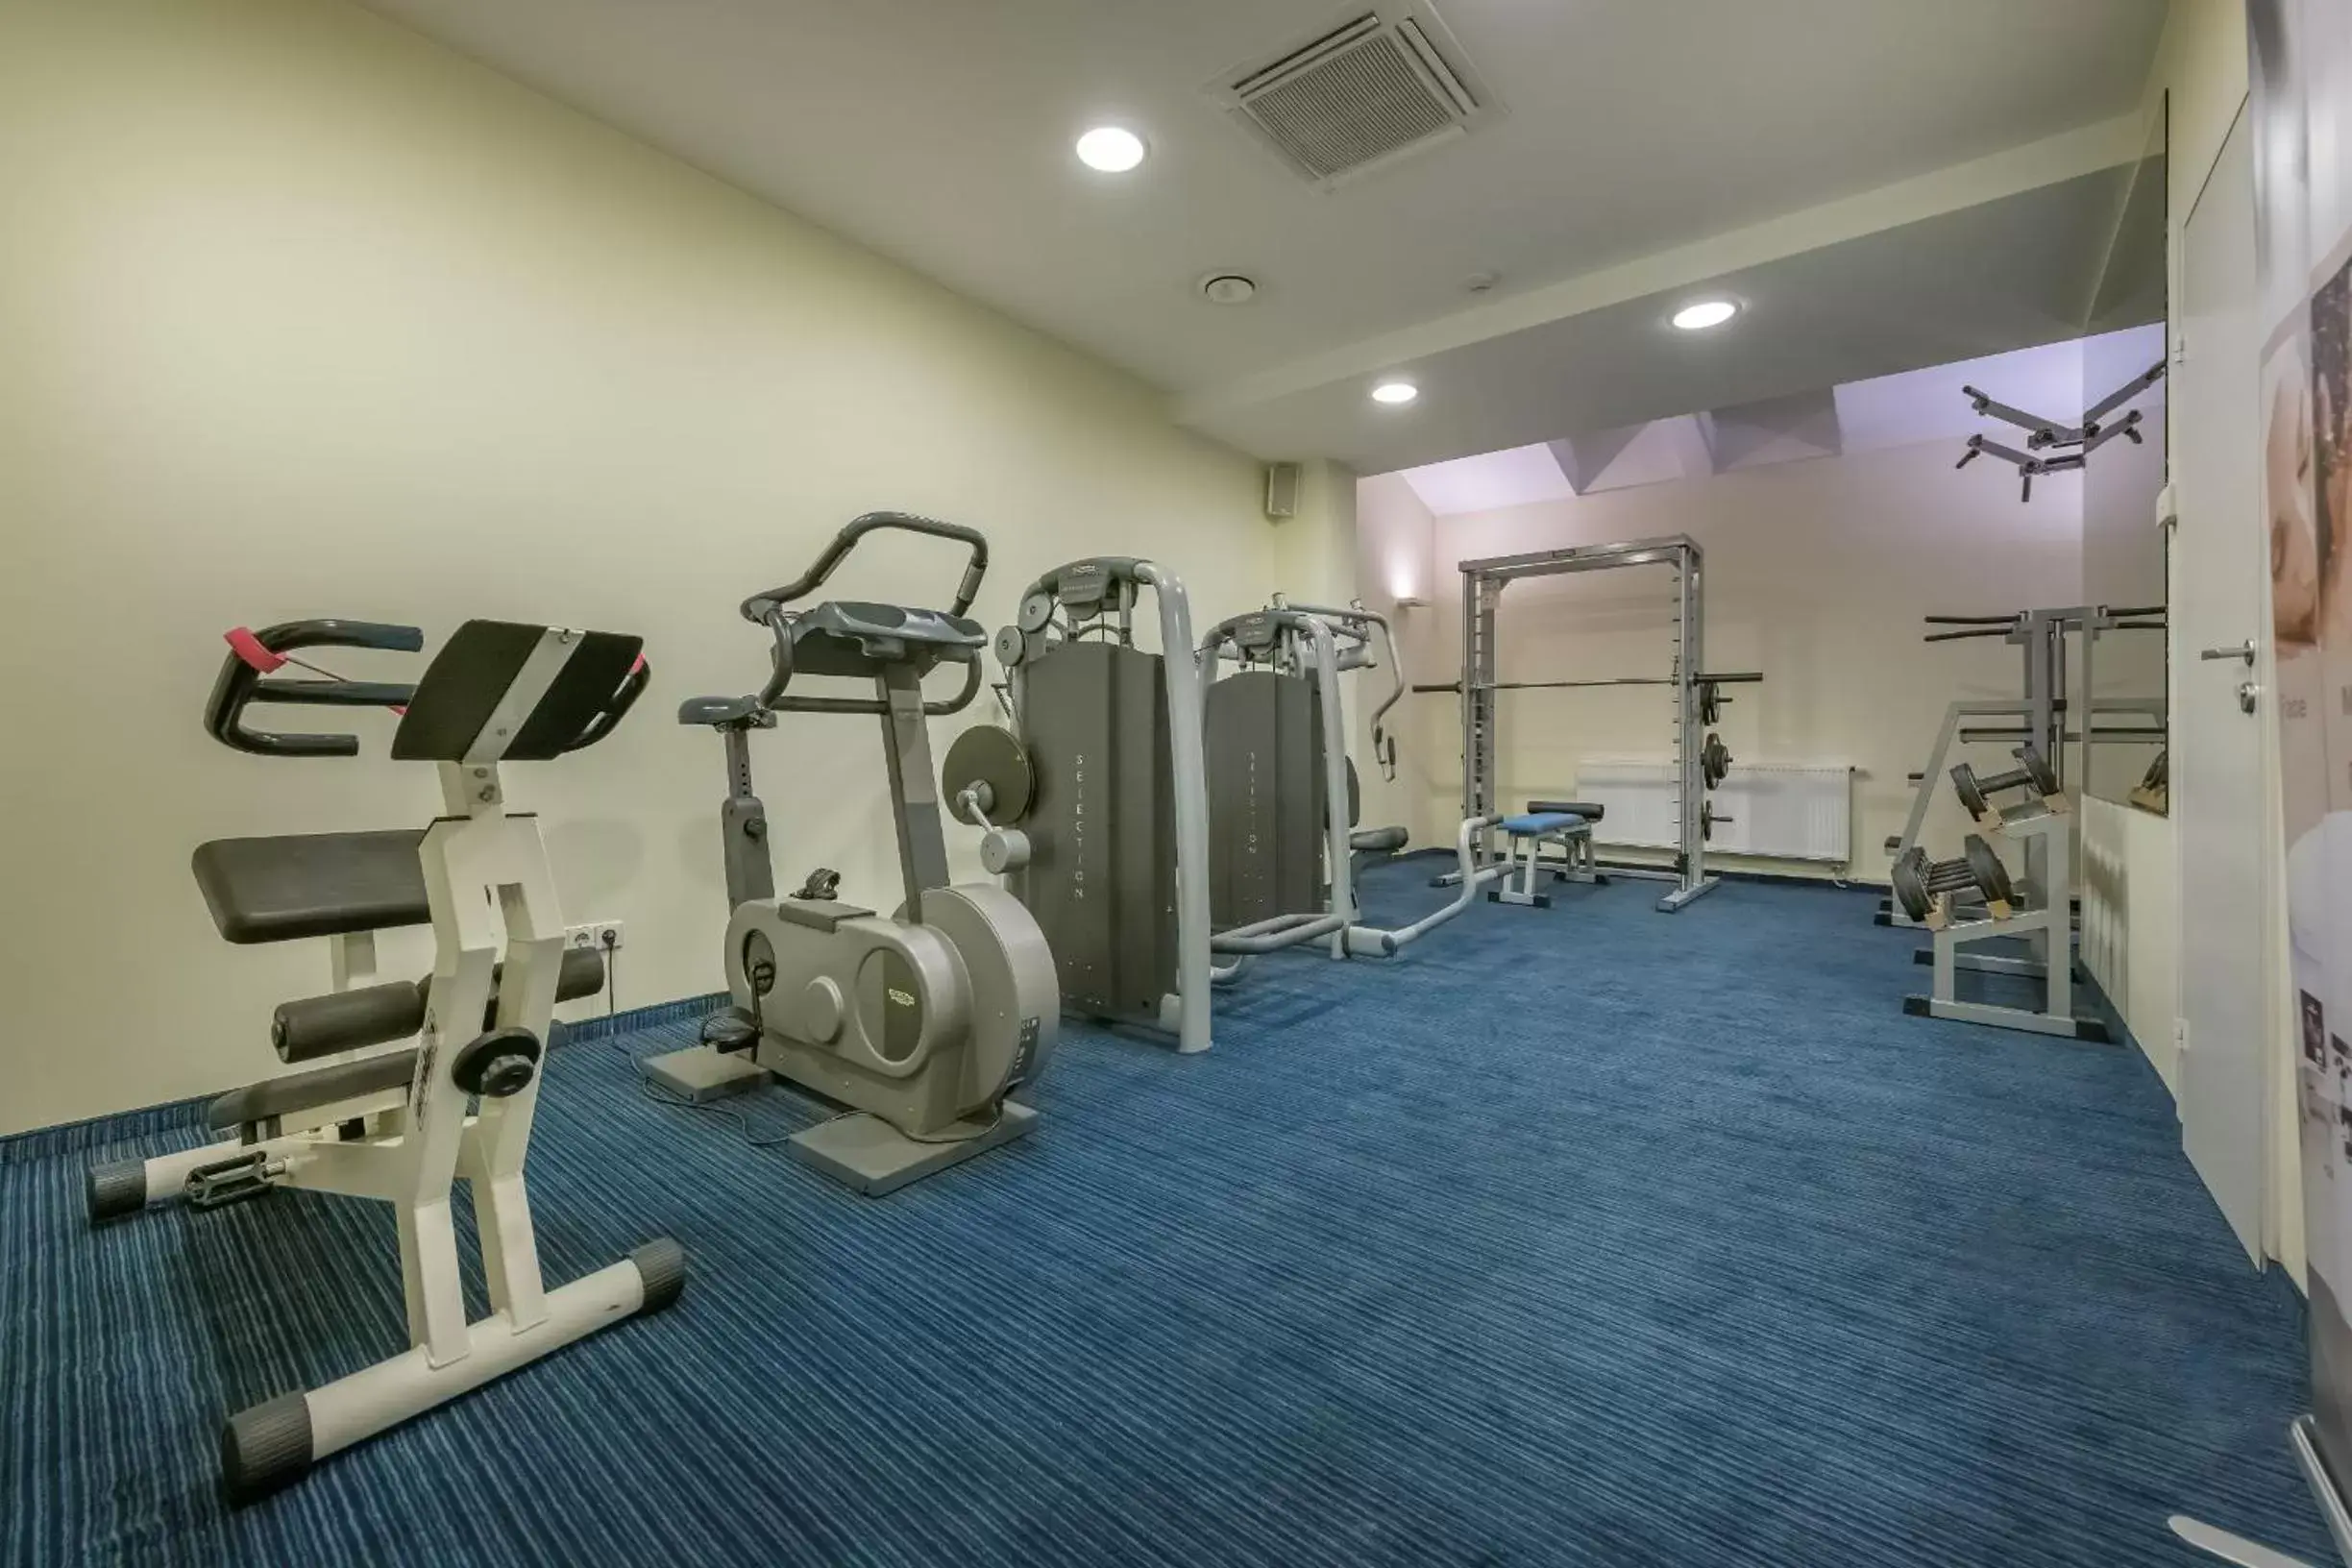 Fitness centre/facilities, Fitness Center/Facilities in Artis Centrum Hotels